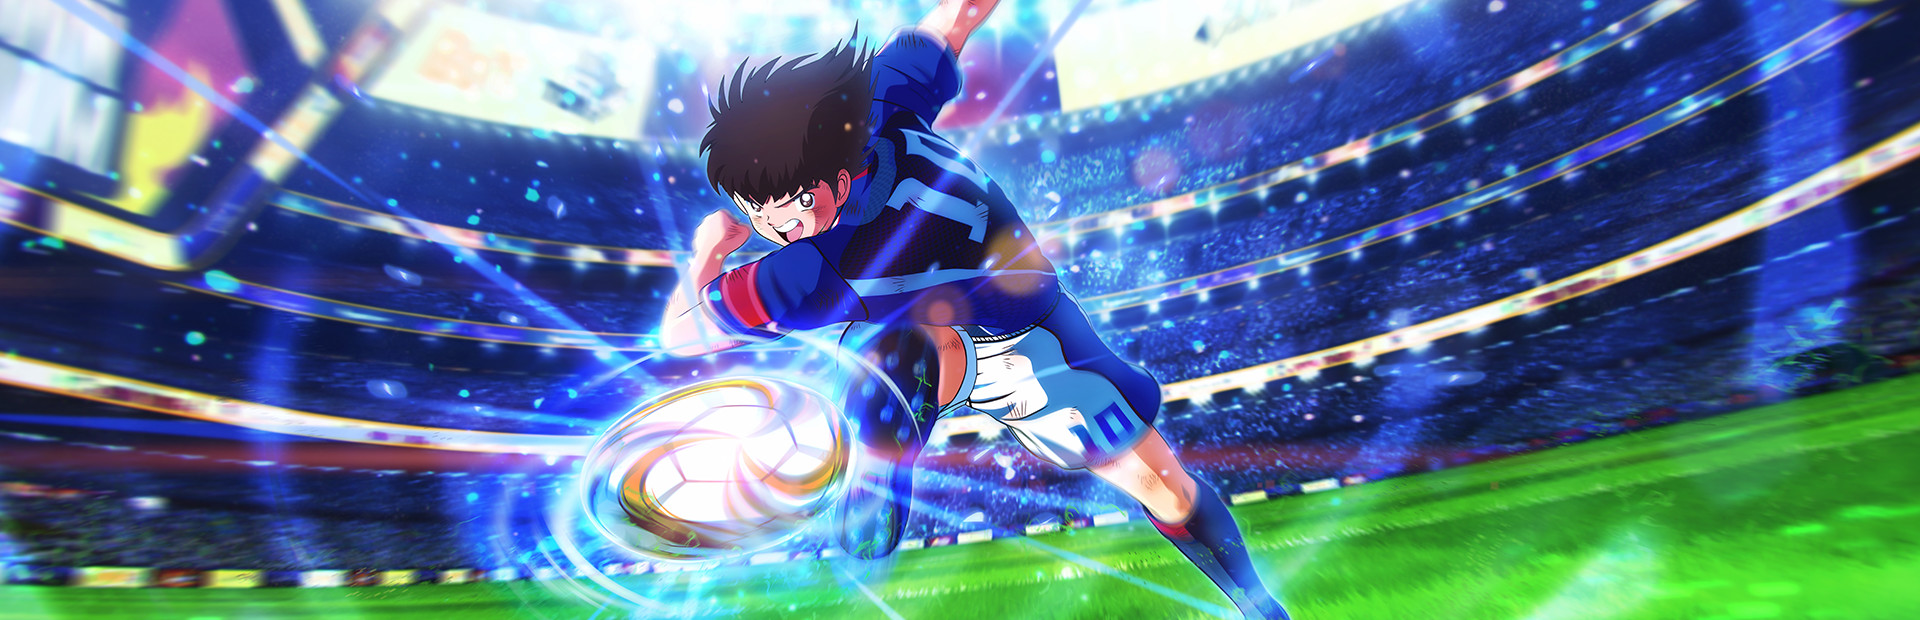 Captain Tsubasa: Rise of New Champions cover image